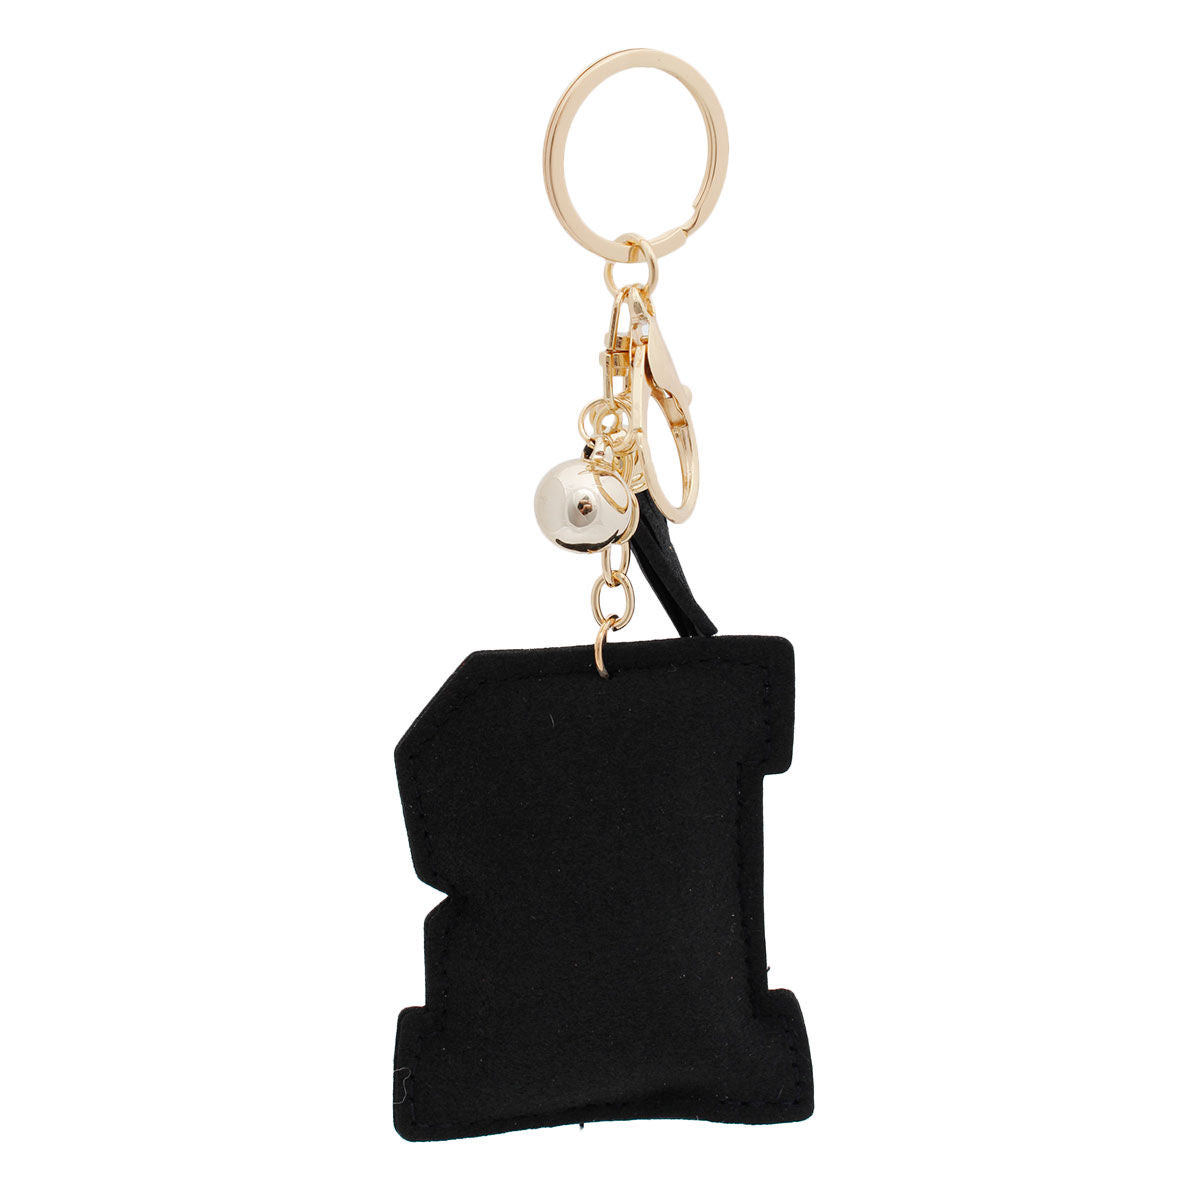 R Black Keychain Bag Charm